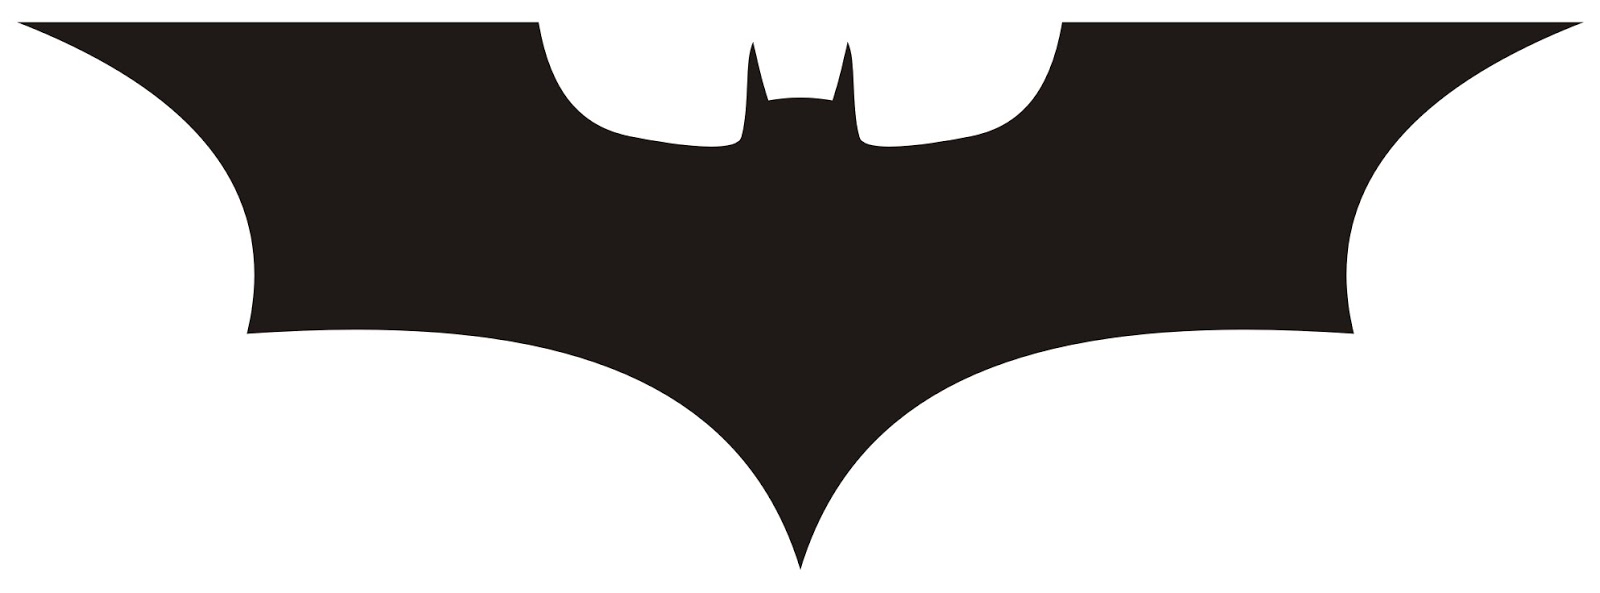 batman logo clip art free - photo #41